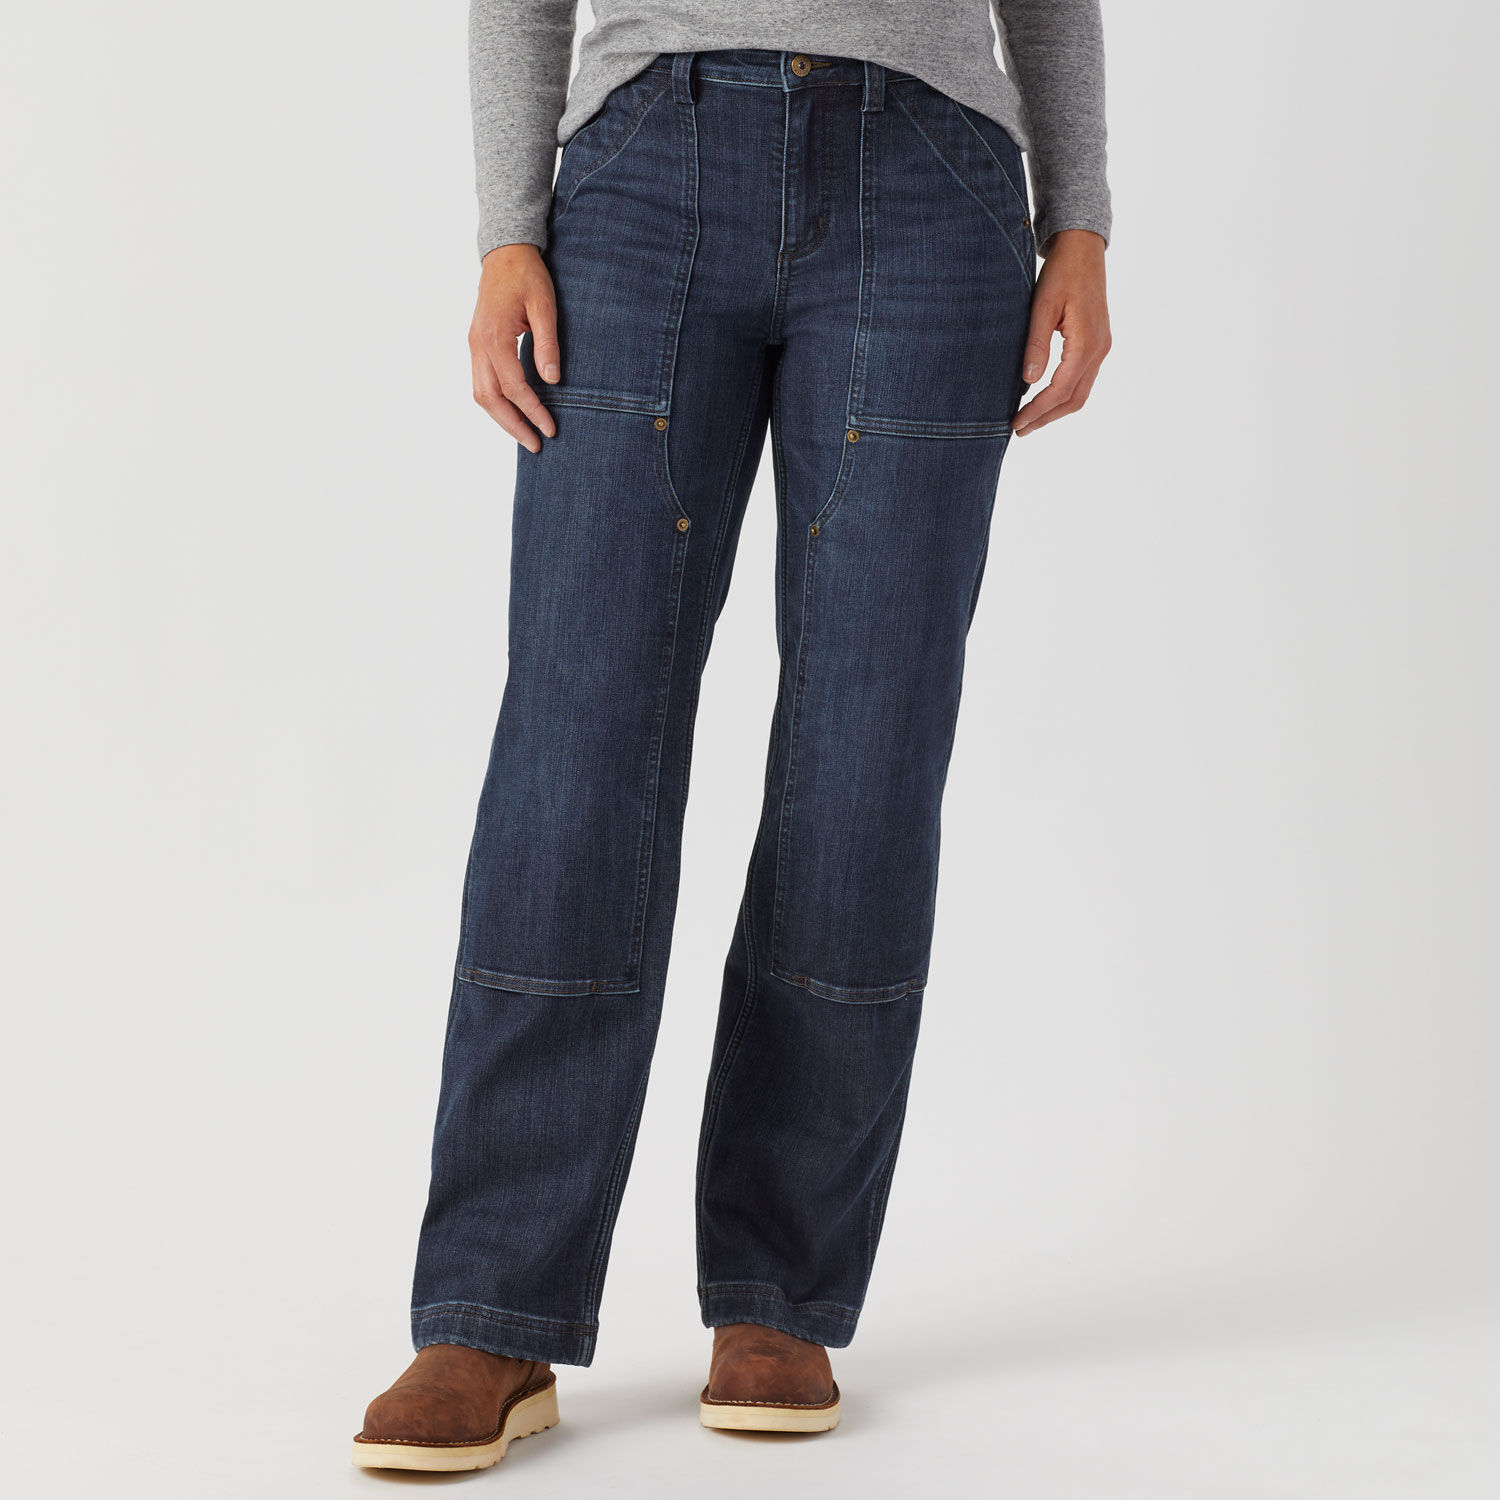 Dress pants for women Men's Thermal Fleece Pockets Thickened Fleece Lined  Casual Sports Trousers Pants Fagarn - Walmart.com